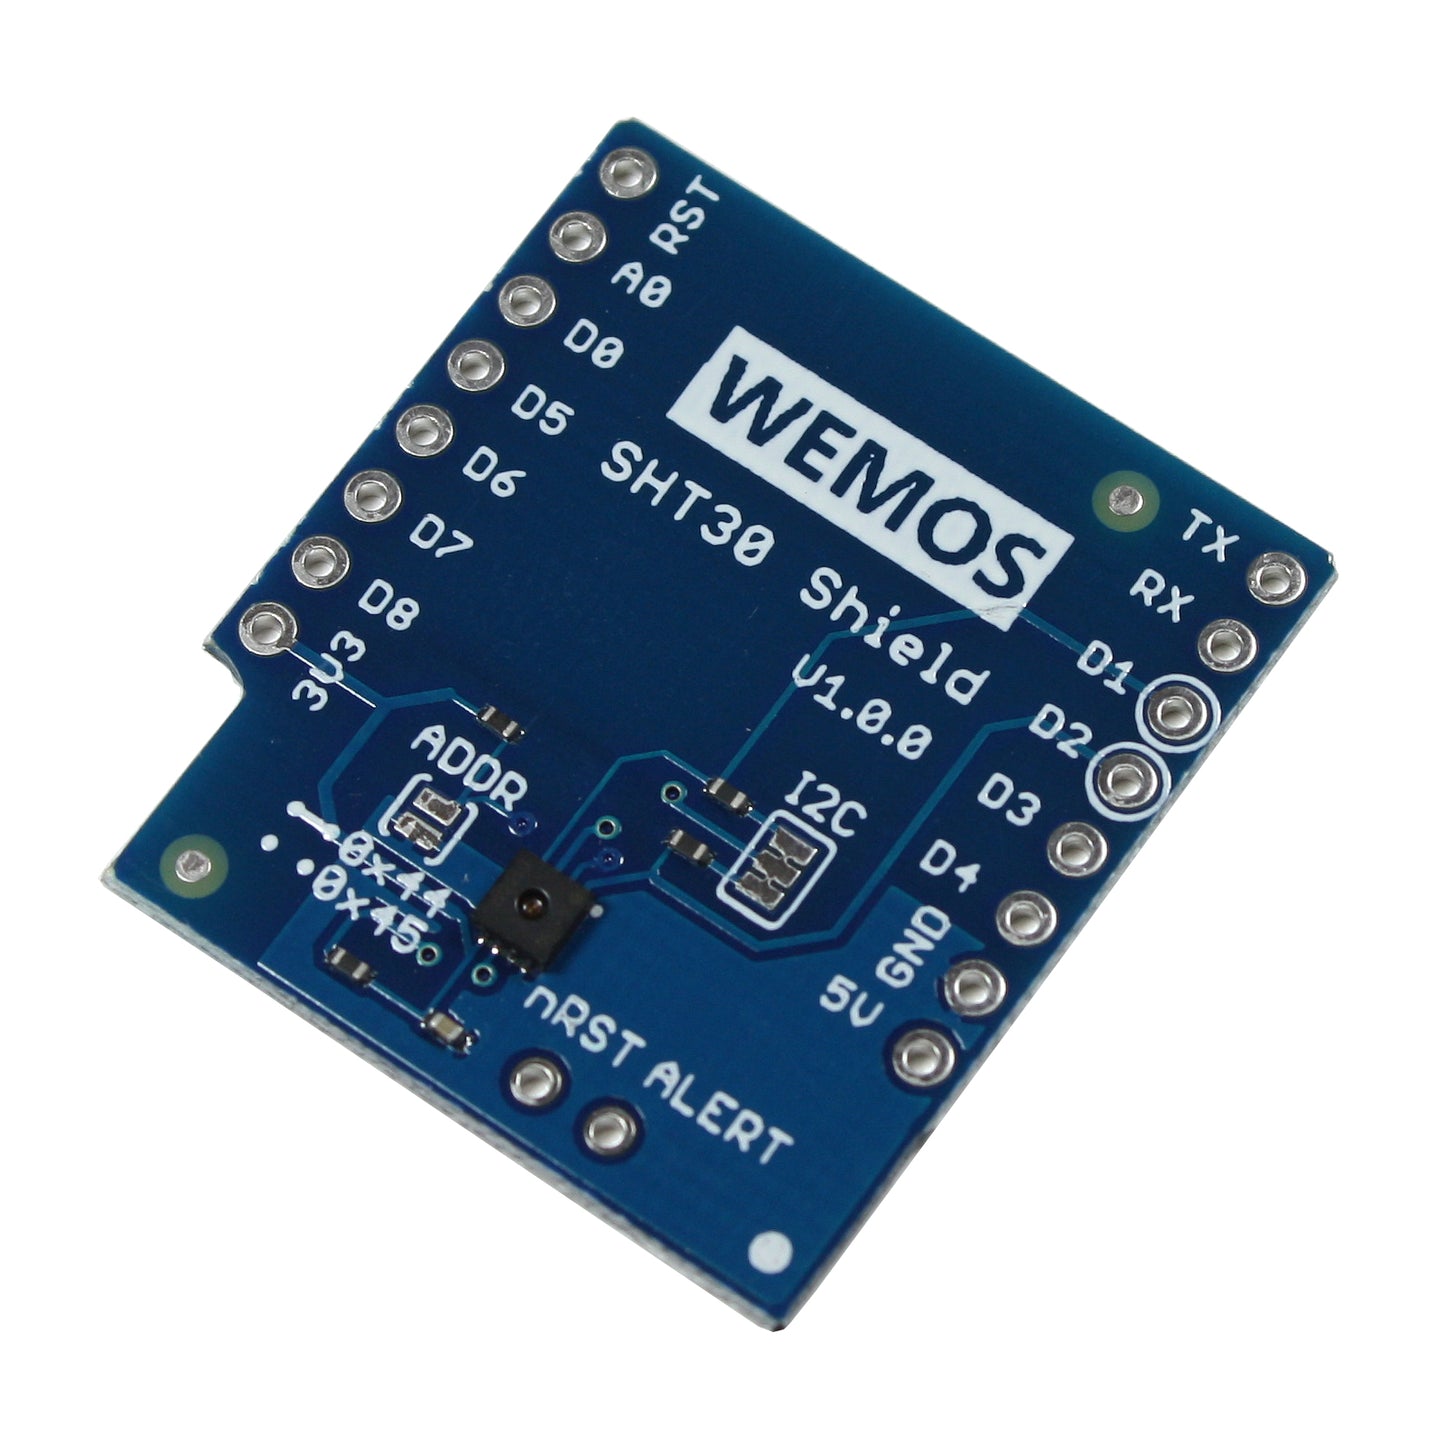 SHT30 Shield, Temperature and Humidity Sensor for WeMos D1 mini